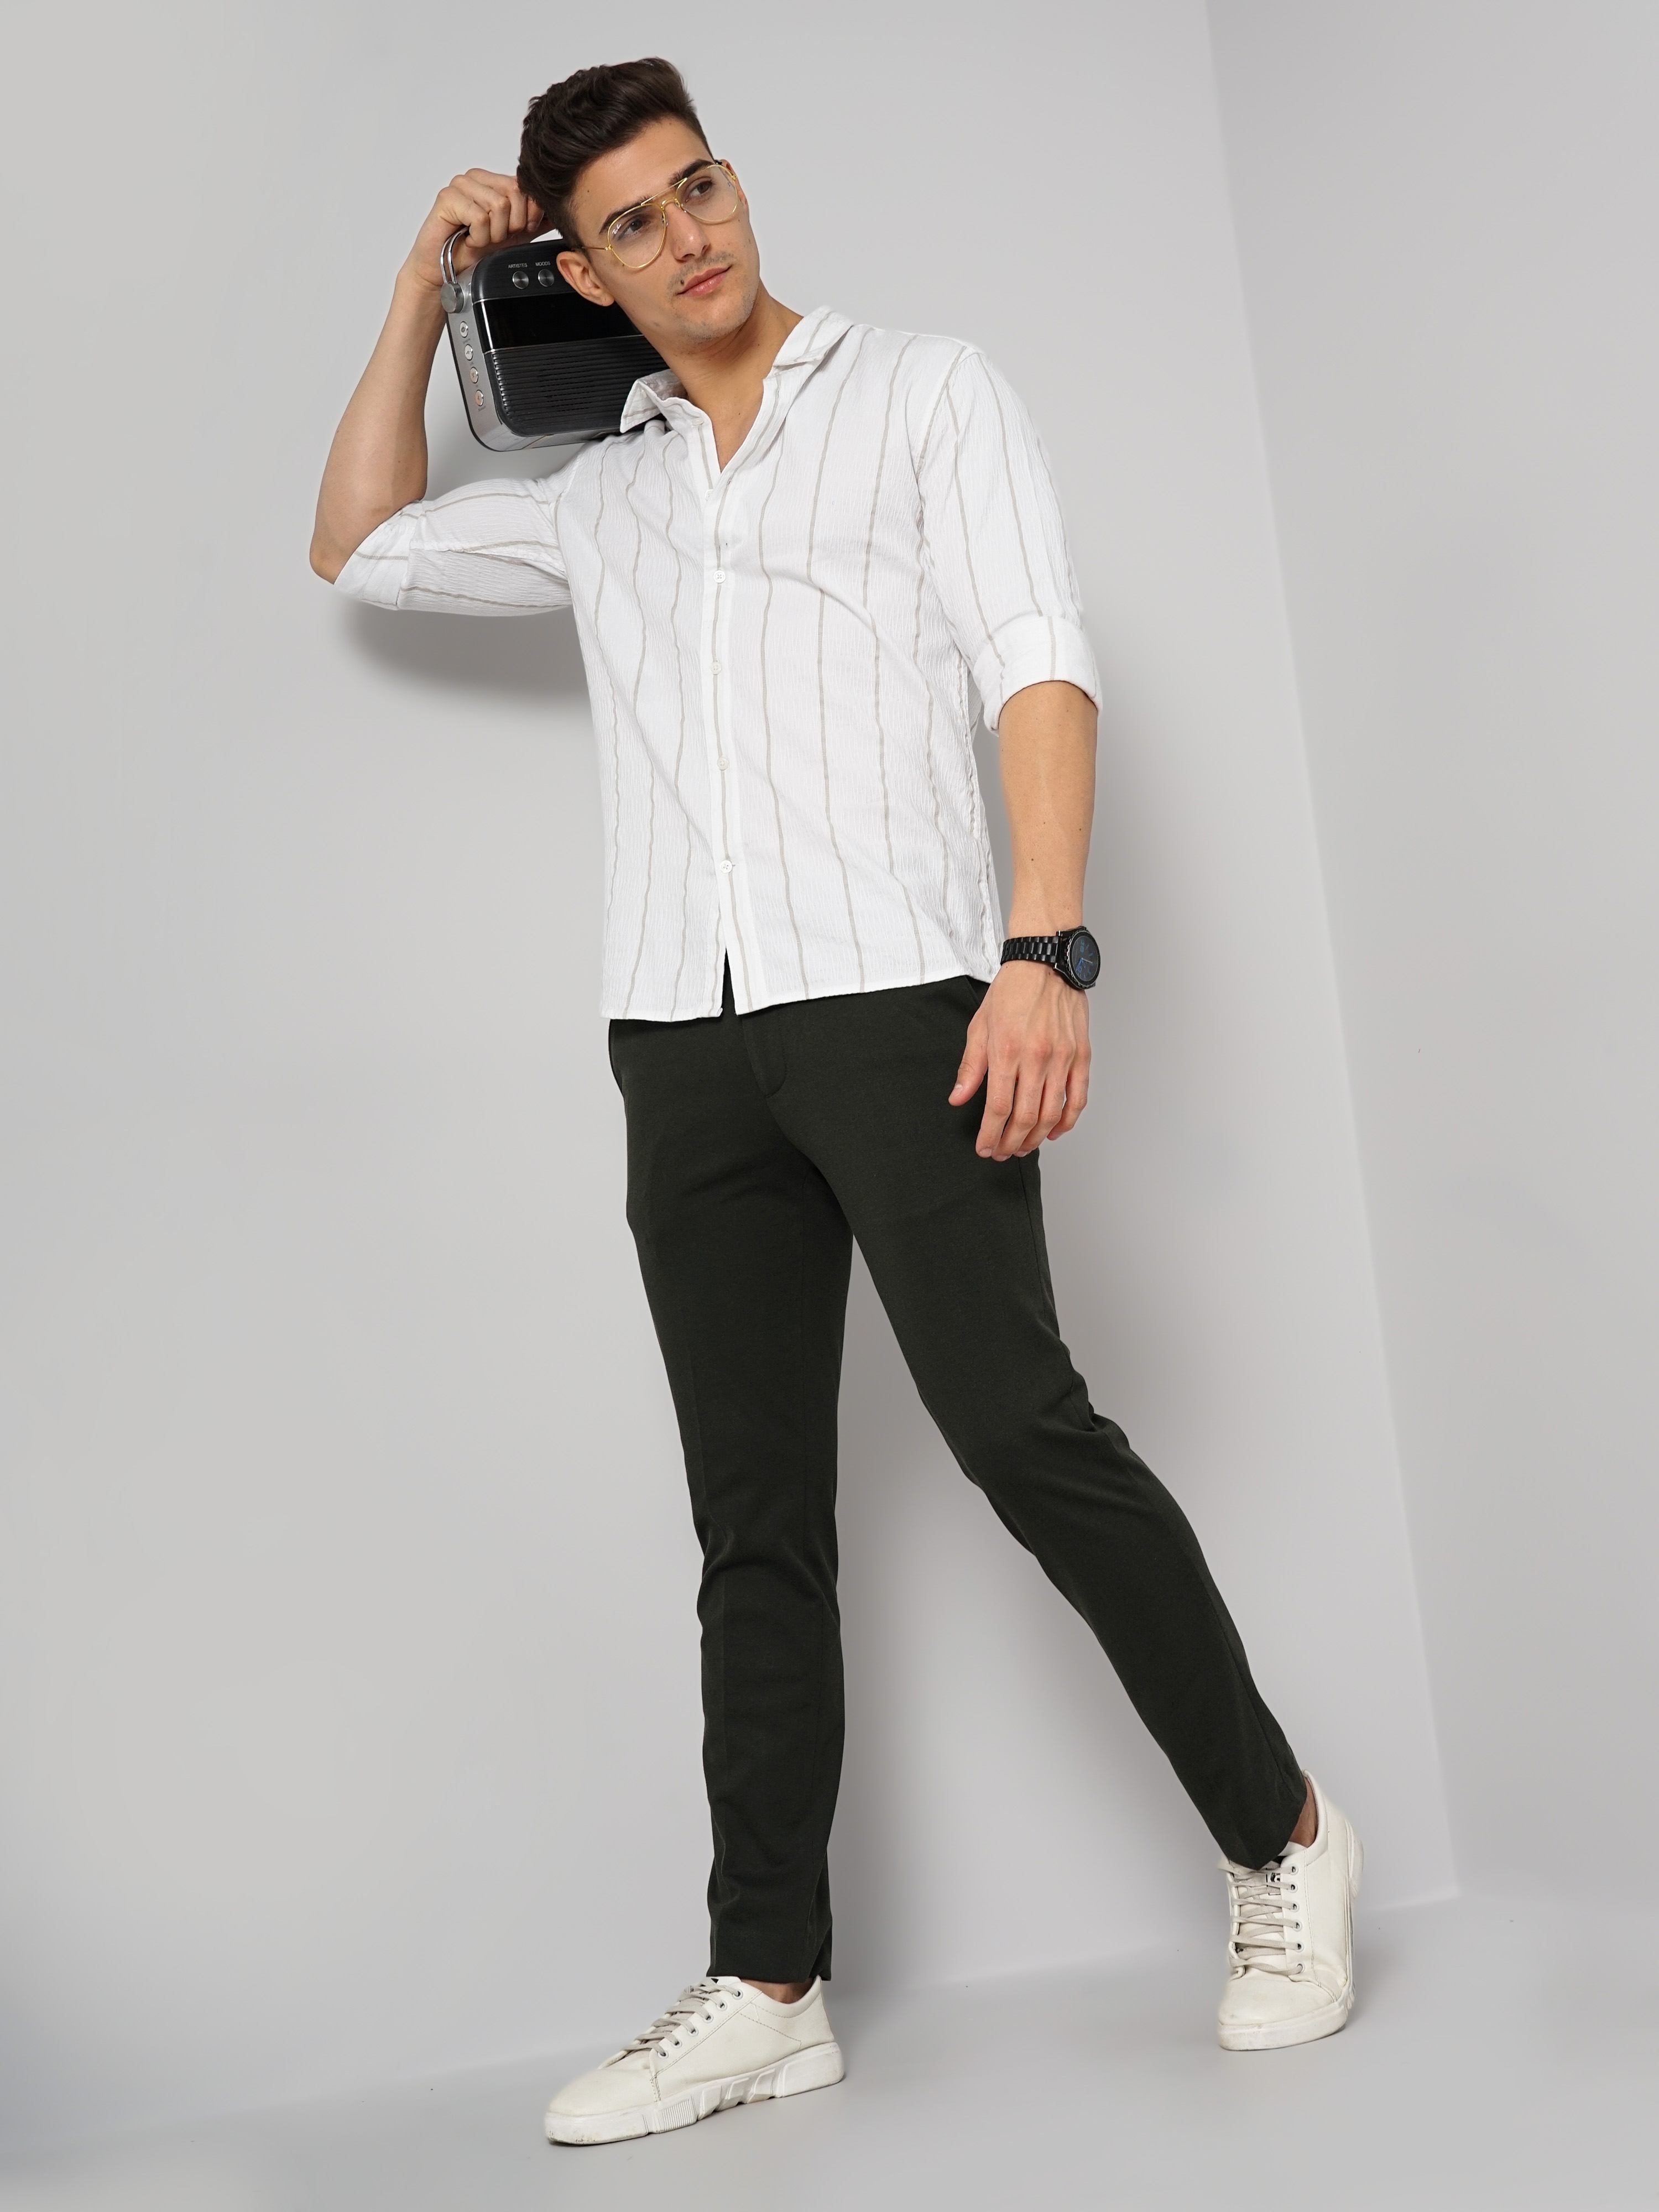 Men's White Striped Casual Shirts